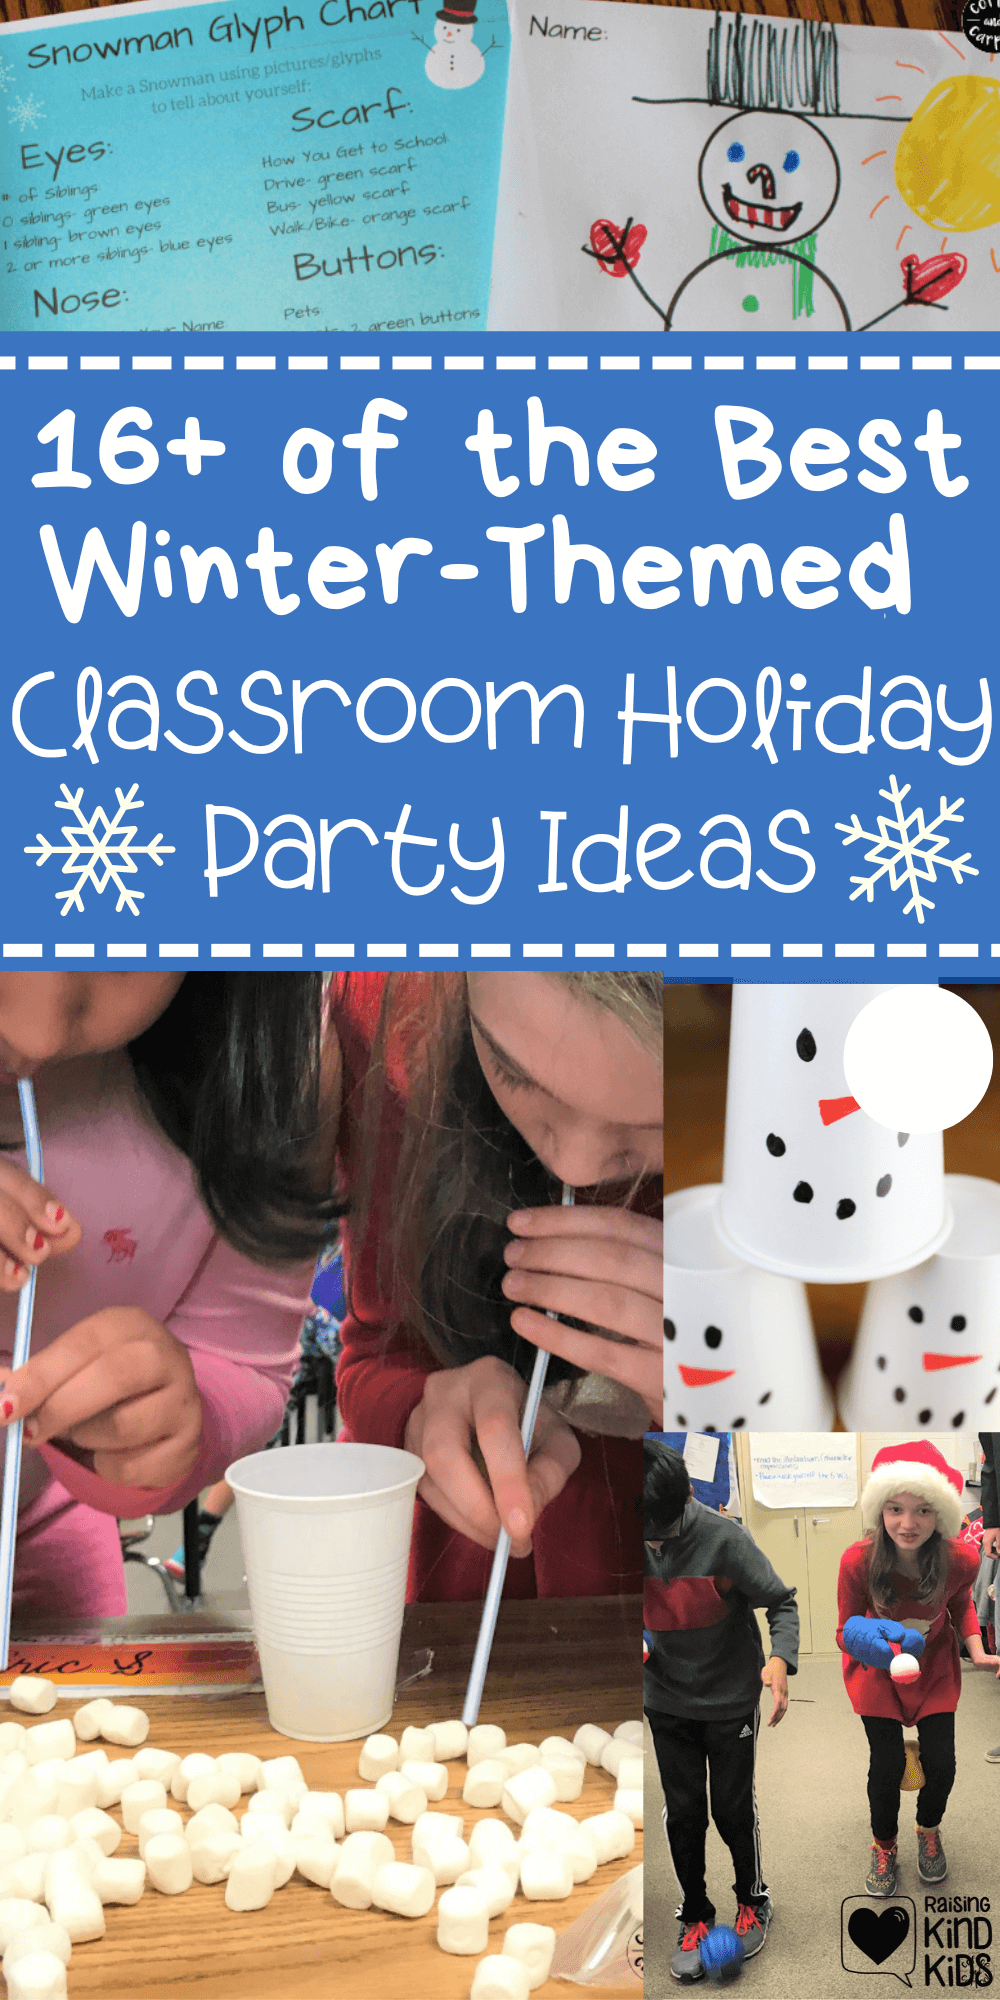 Best Winter-Themed Classroom Party Activities kids will love #classroompartyactivities #classroomparties #holidayparties #coffeeandcarpool #winterparties